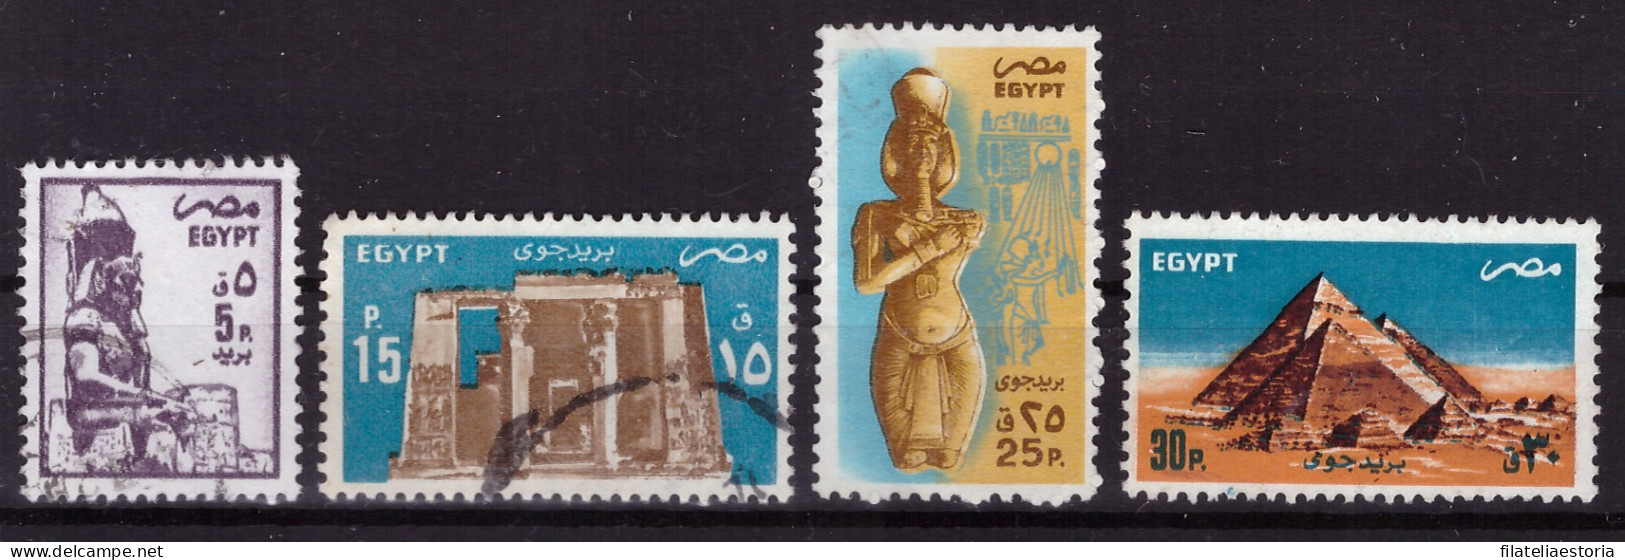 Egypte 1985/1998 - Oblitéré - Monuments - Art - Michel Nr. 1501 1506 1509-1510 (egy361) - Oblitérés